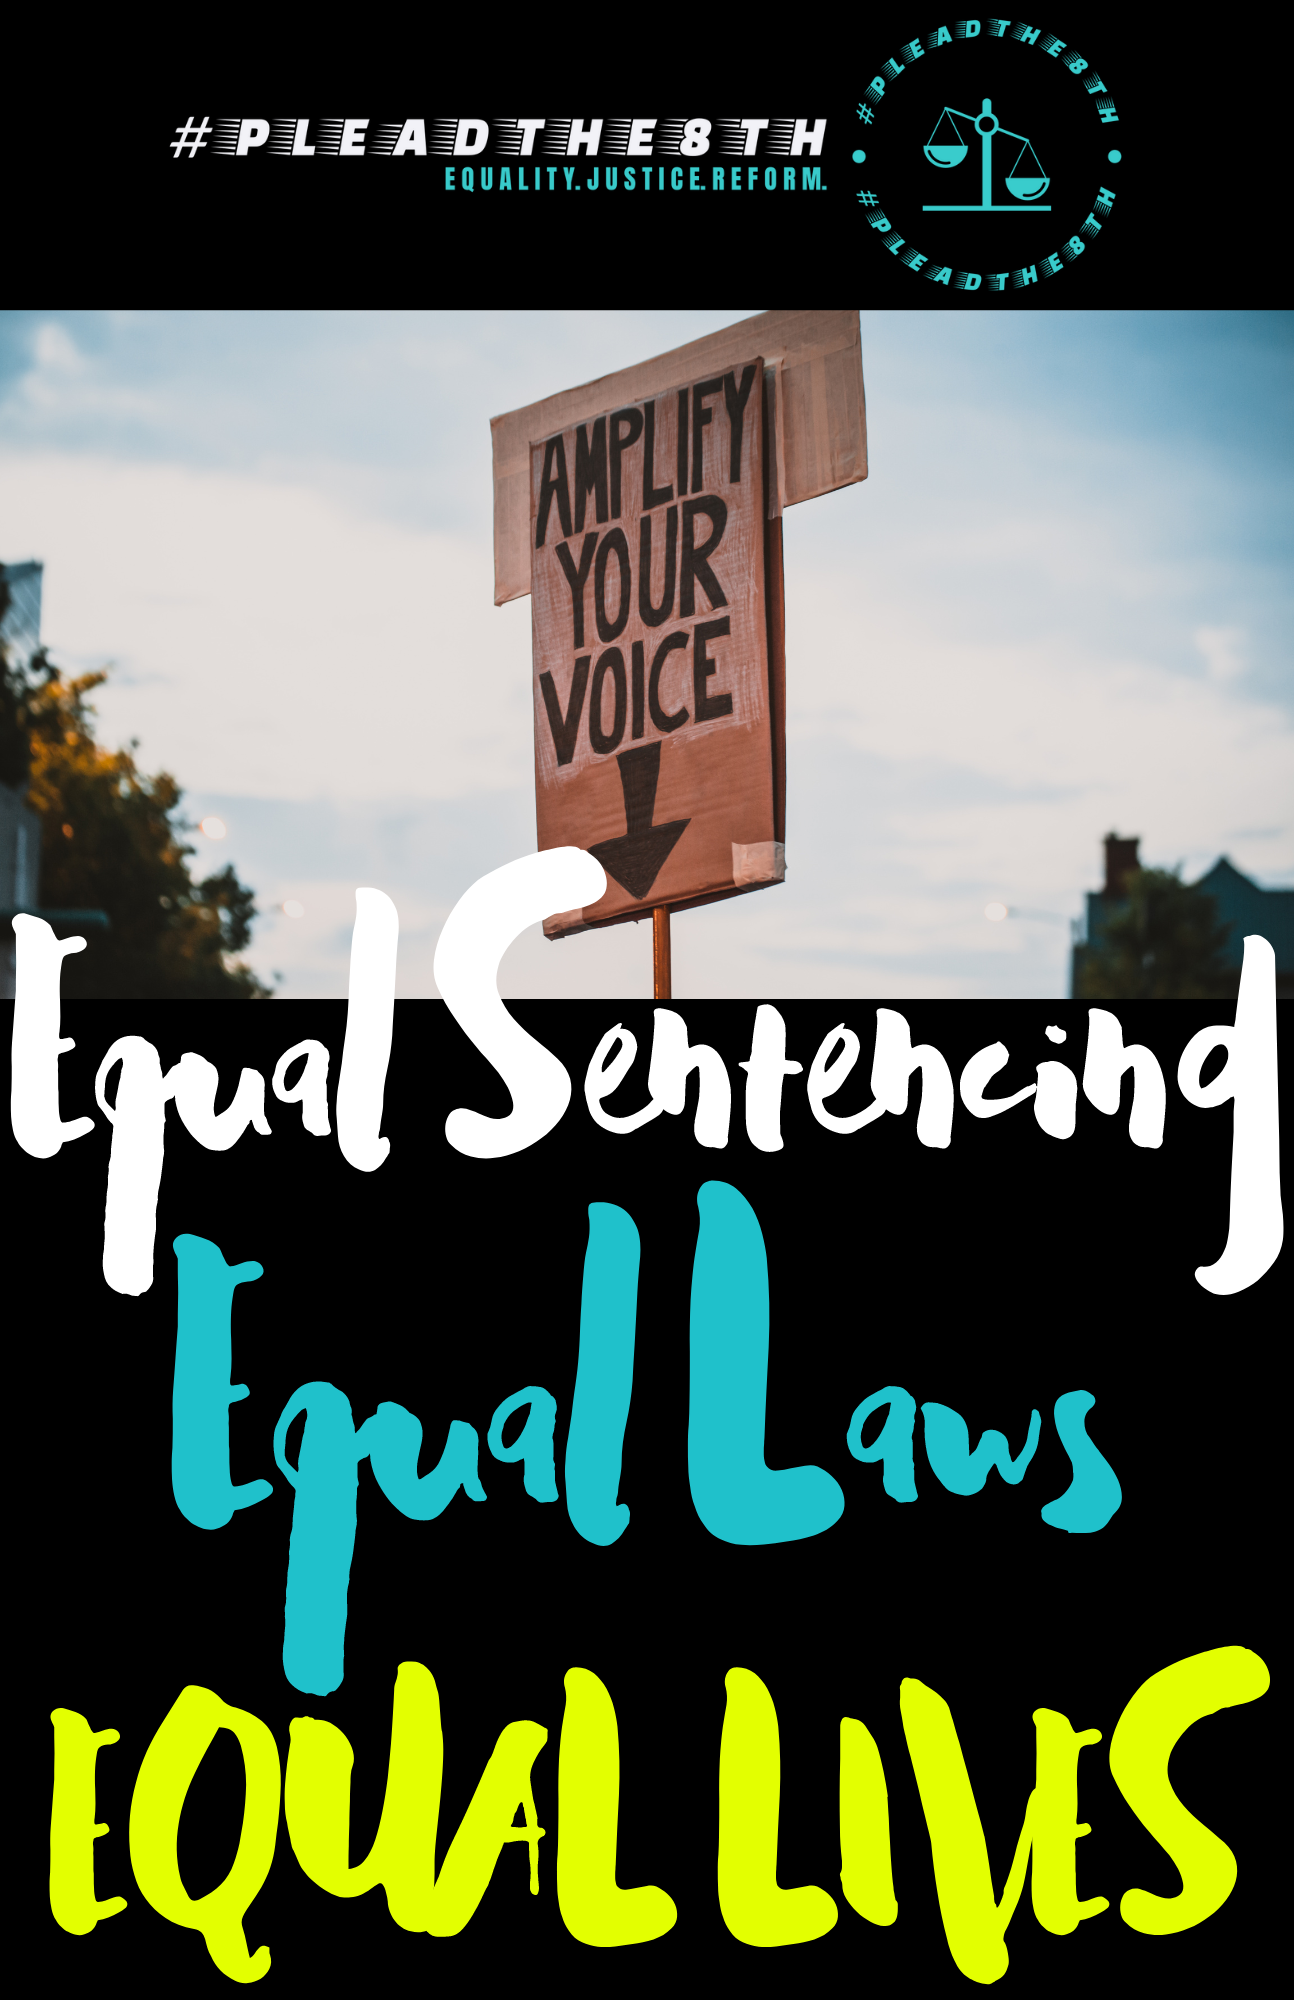 PleadThe8th; equal sentencing, equal laws, equal lives